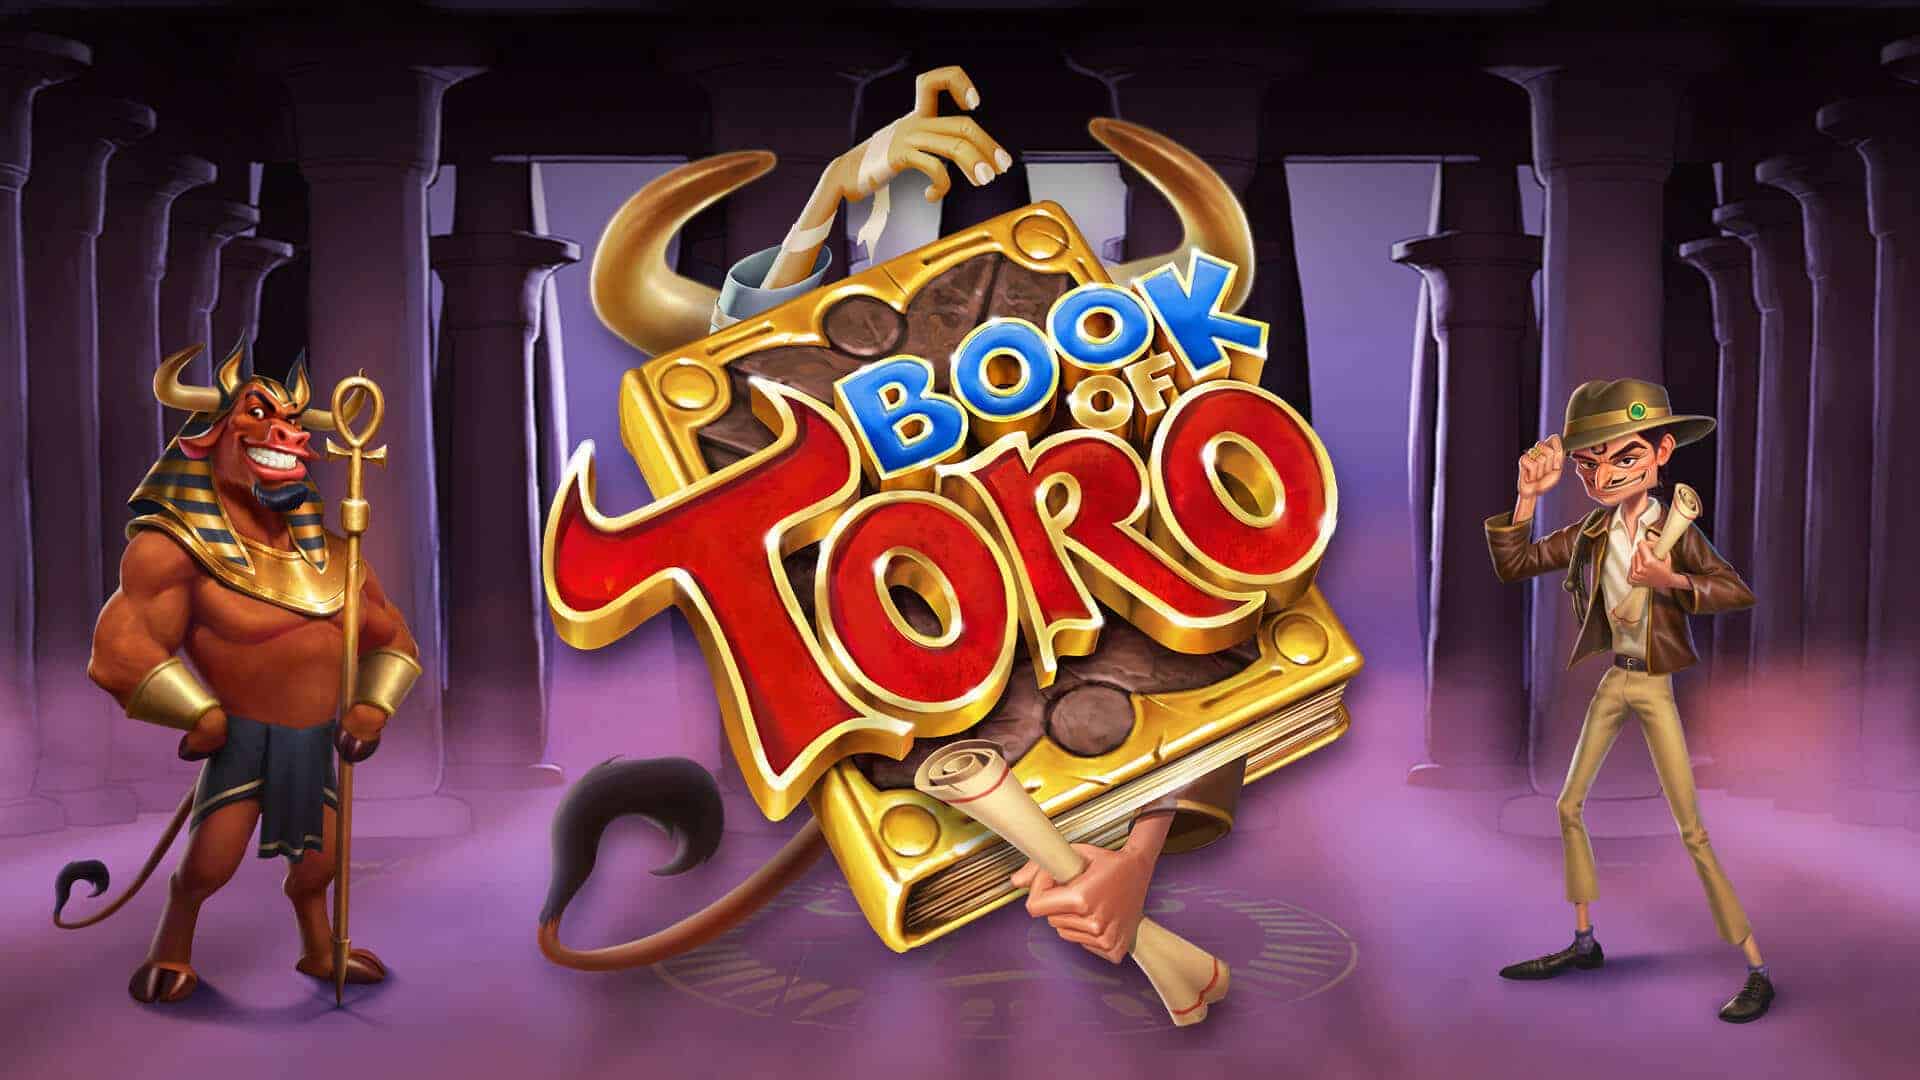 Book of Toro slot cover image